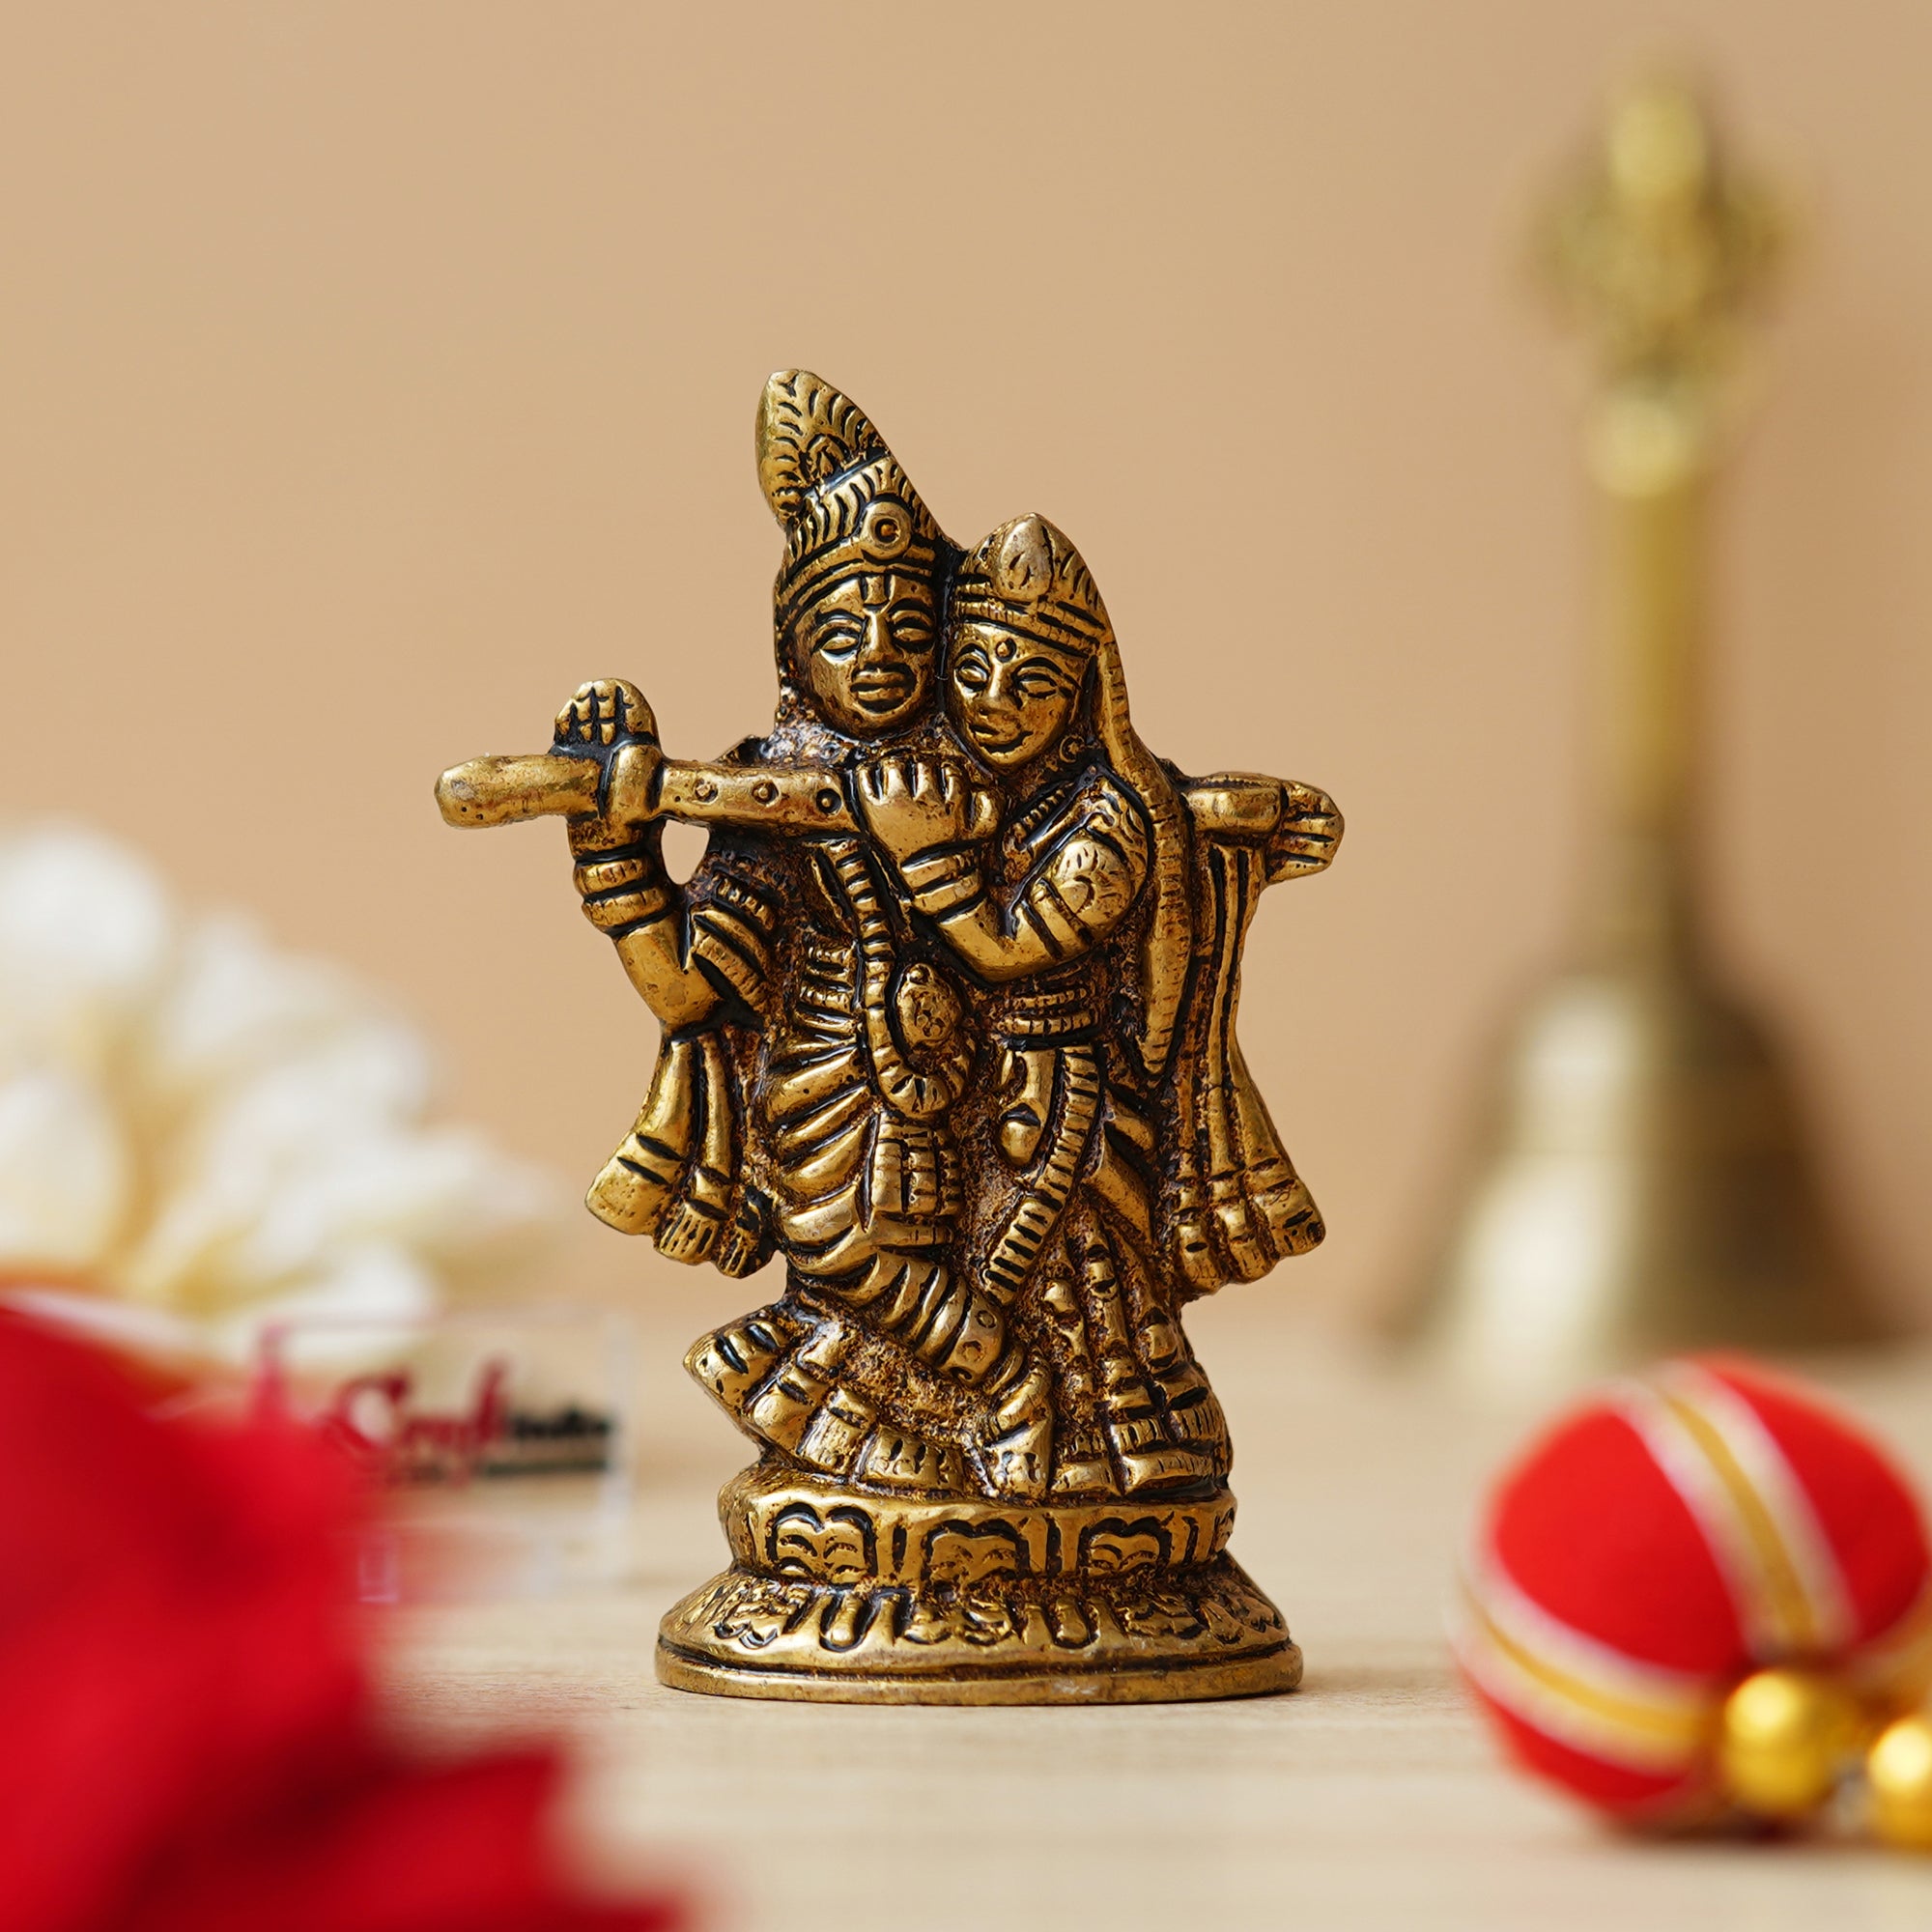 Golden Brass Radha Krishna Murti Idol - God Goddess Statue Decorative Showpiece for Home, Office, Car Dashboard - Gift for Festivals like Janmashtami, Radha Ashtami, and Diwali 4